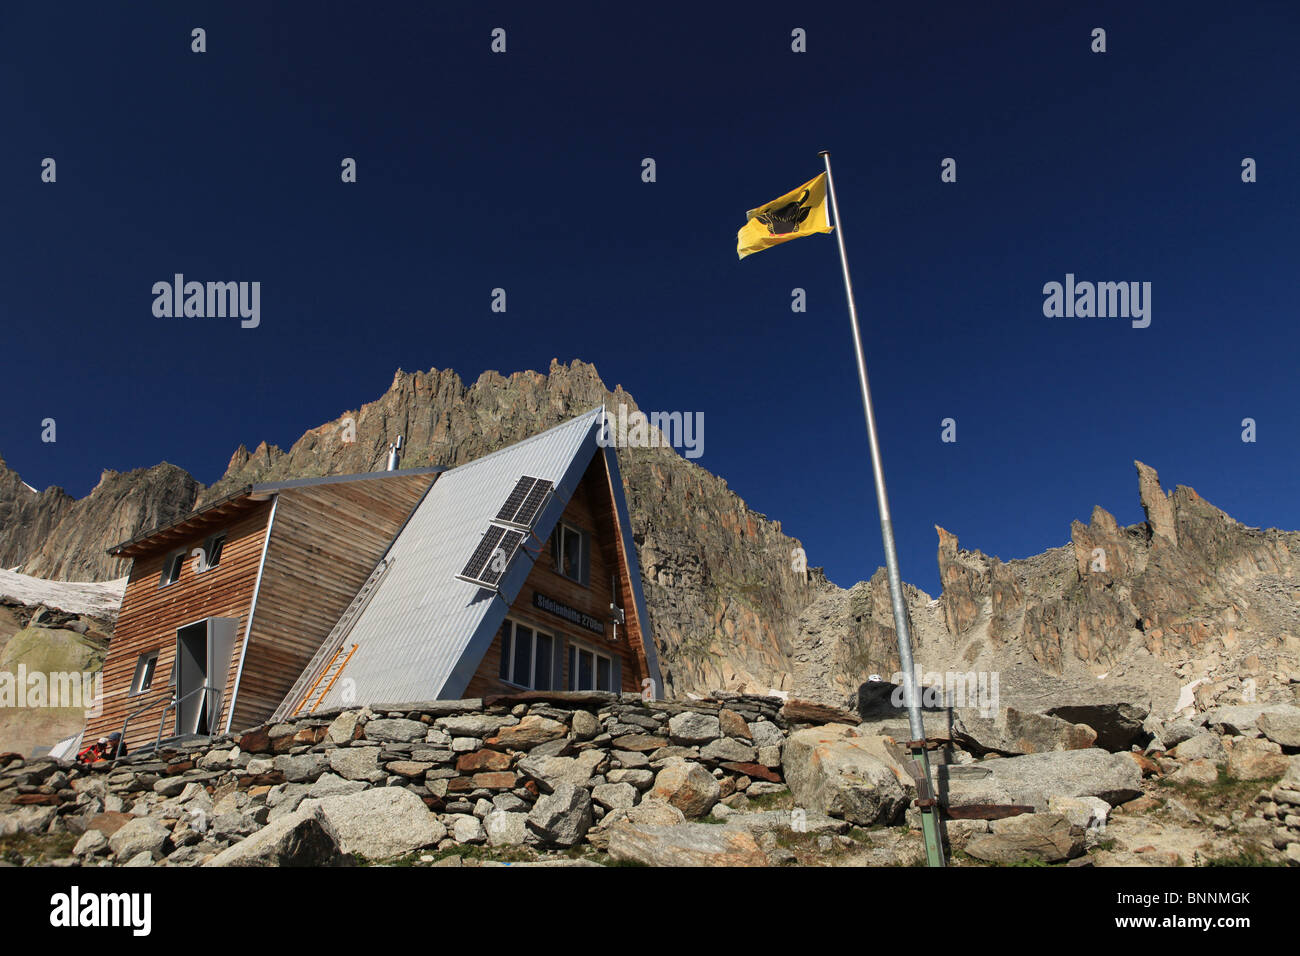 Switzerland swiss sidelen hut sac hi-res stock photography and images -  Alamy